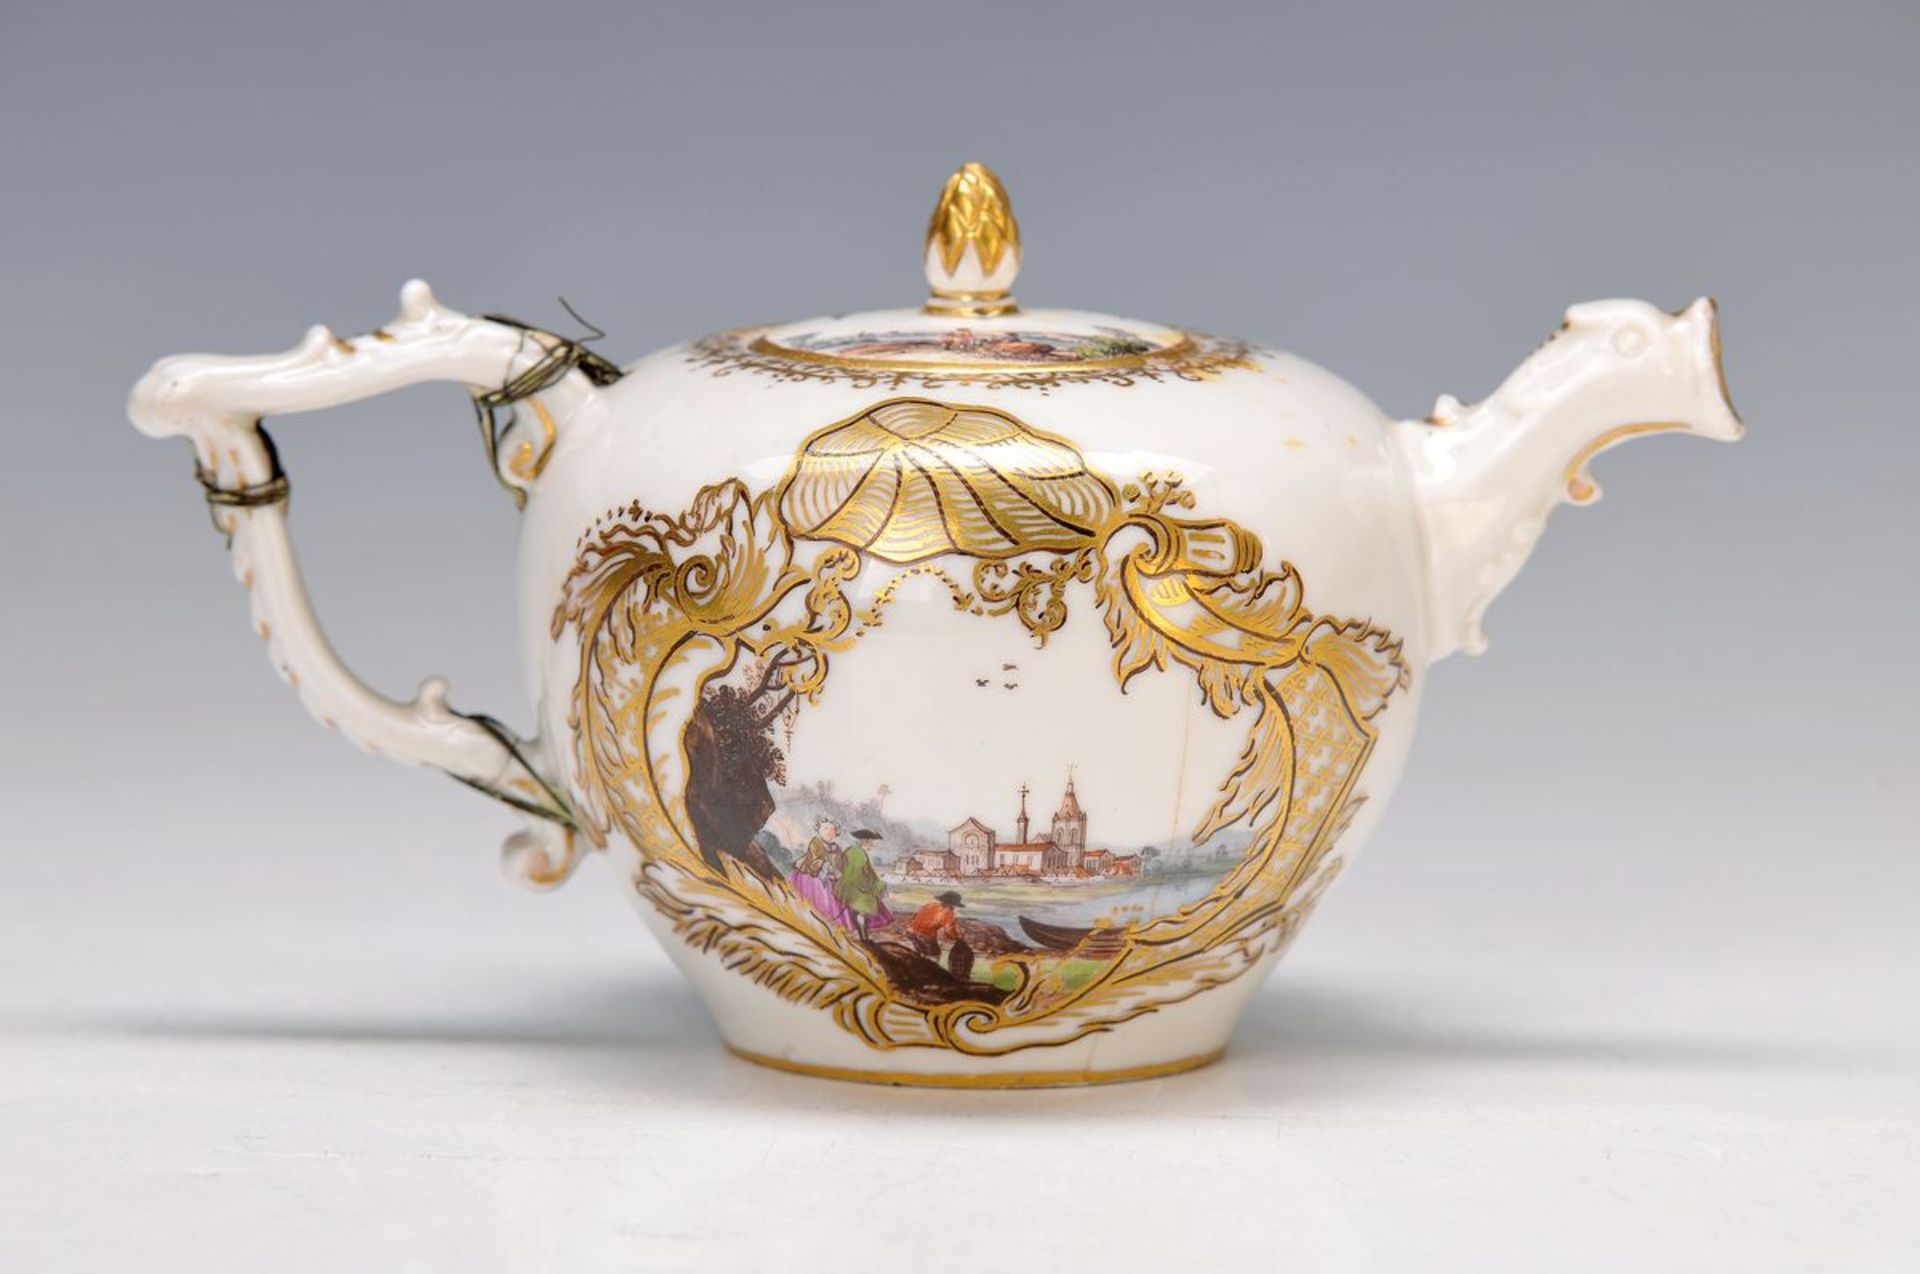 tea pot, Meissen, around 1740, quality full polychrome painting, miniature-like representations of